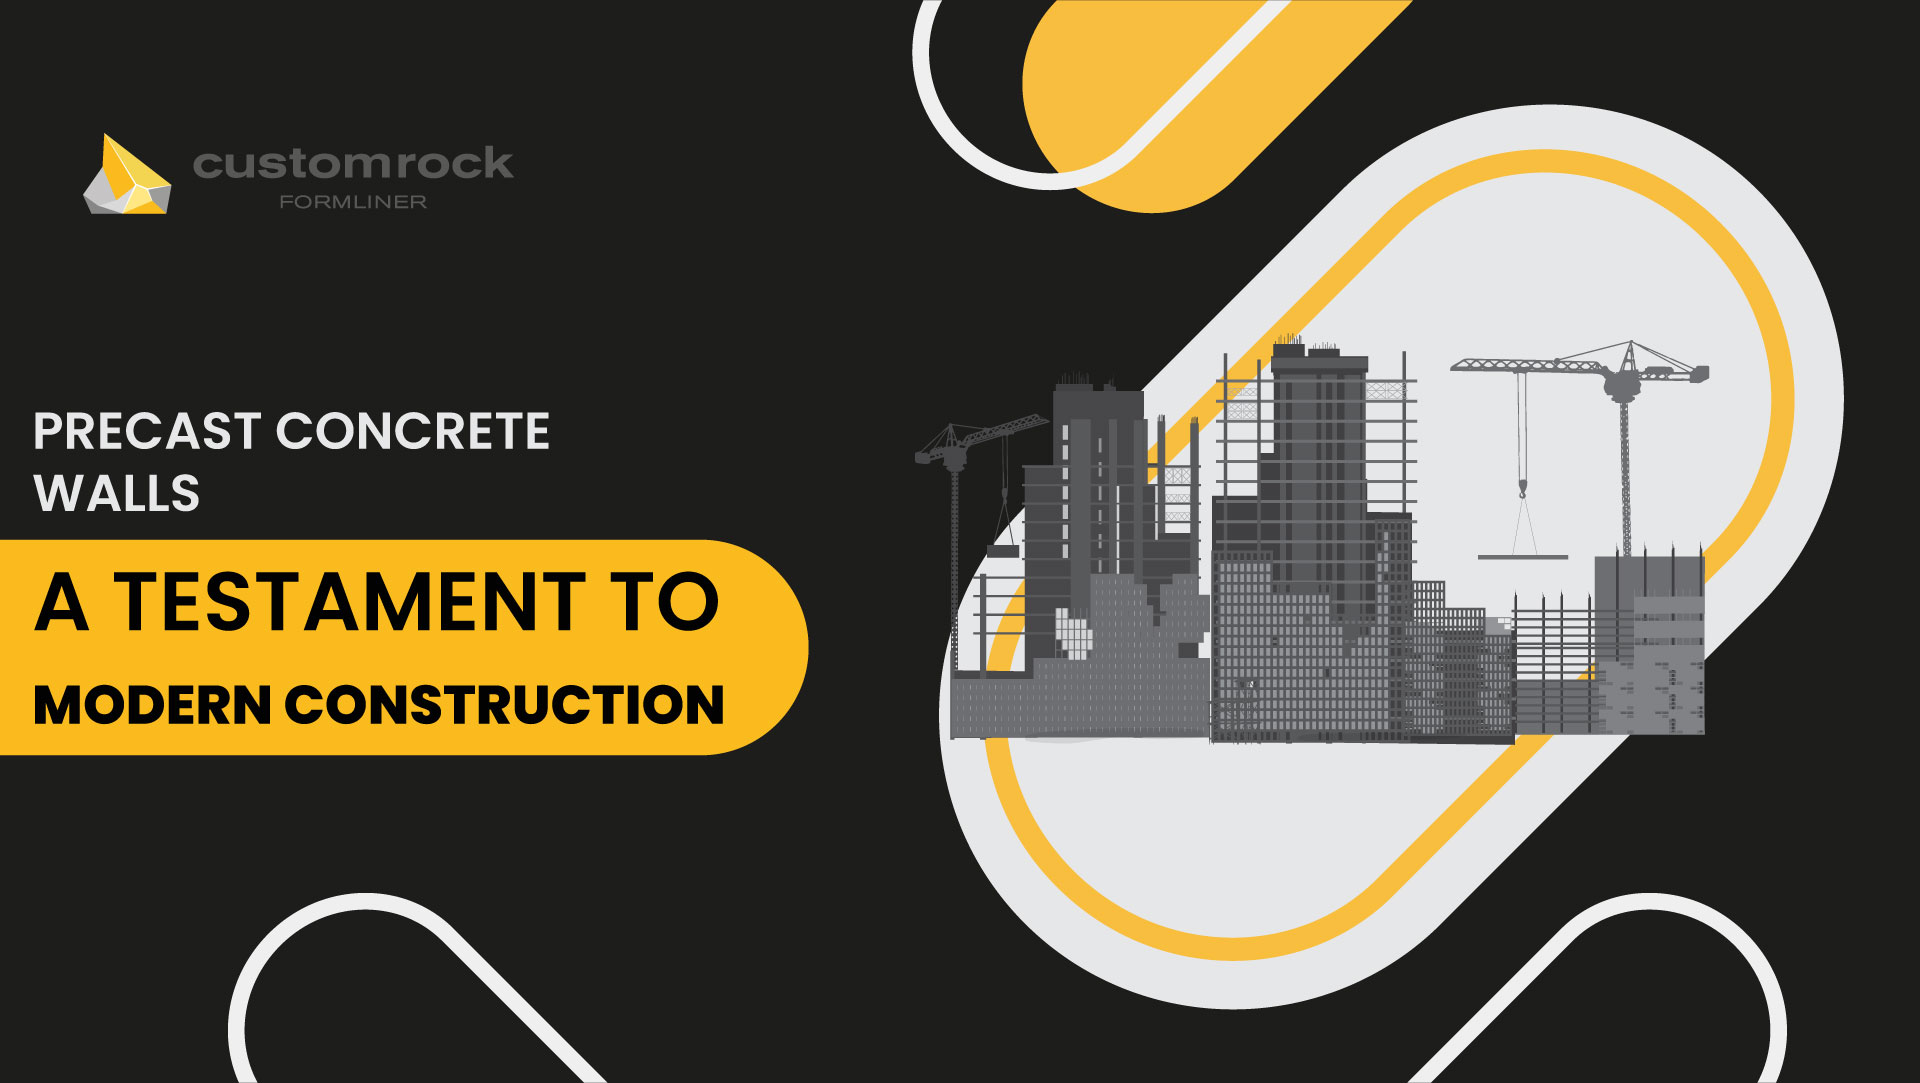 Precast Concrete Walls: A Testament to Modern Construction